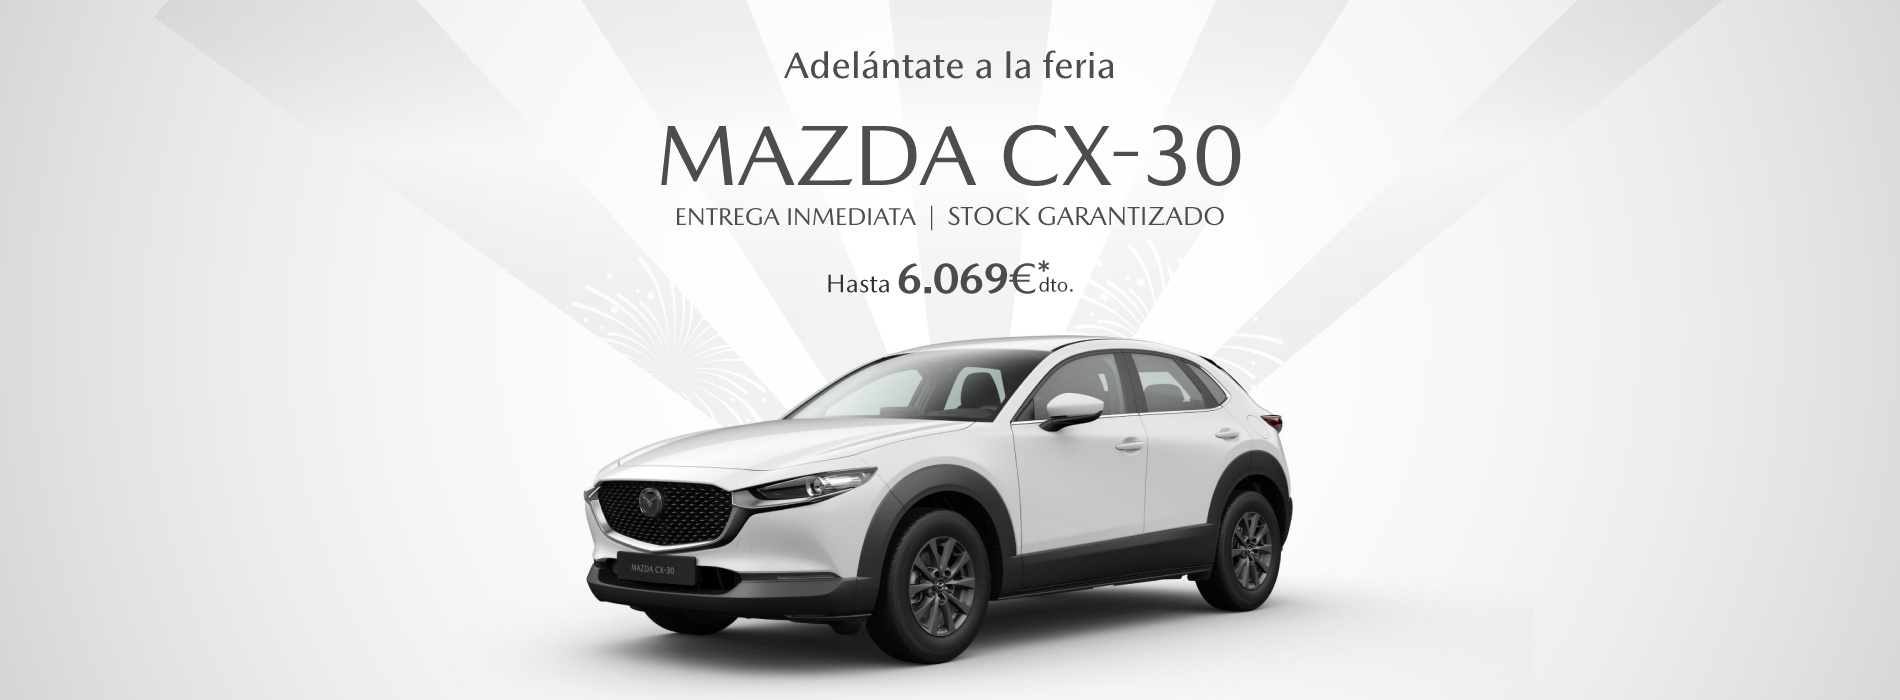 ¡Adelántate a la feria en Mazda Hiromotor Asturias!